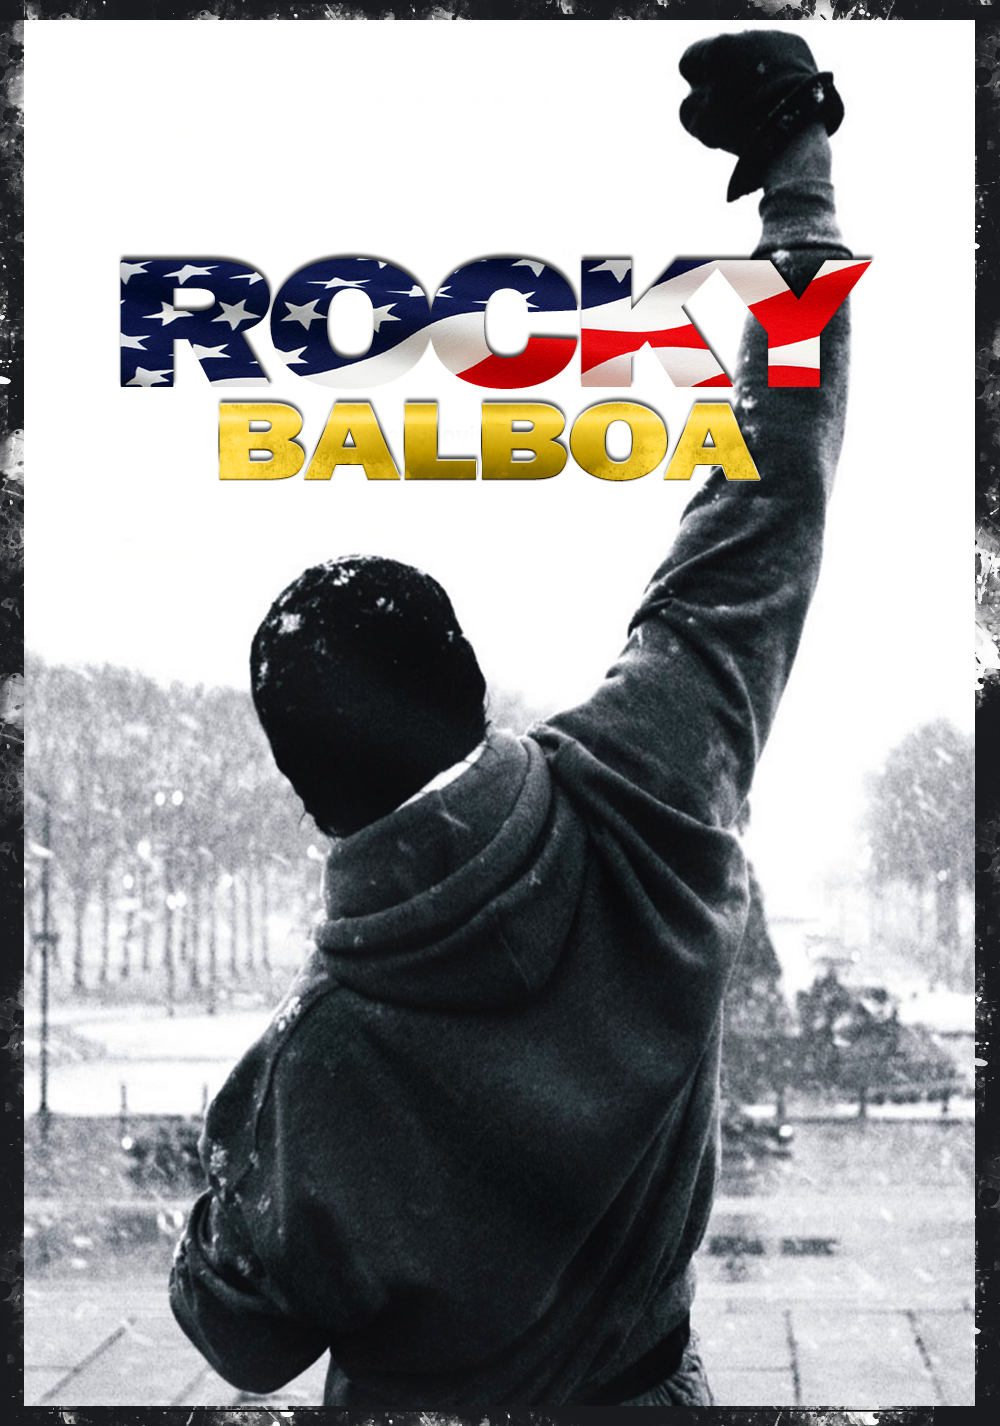 Rocky Balboa Art